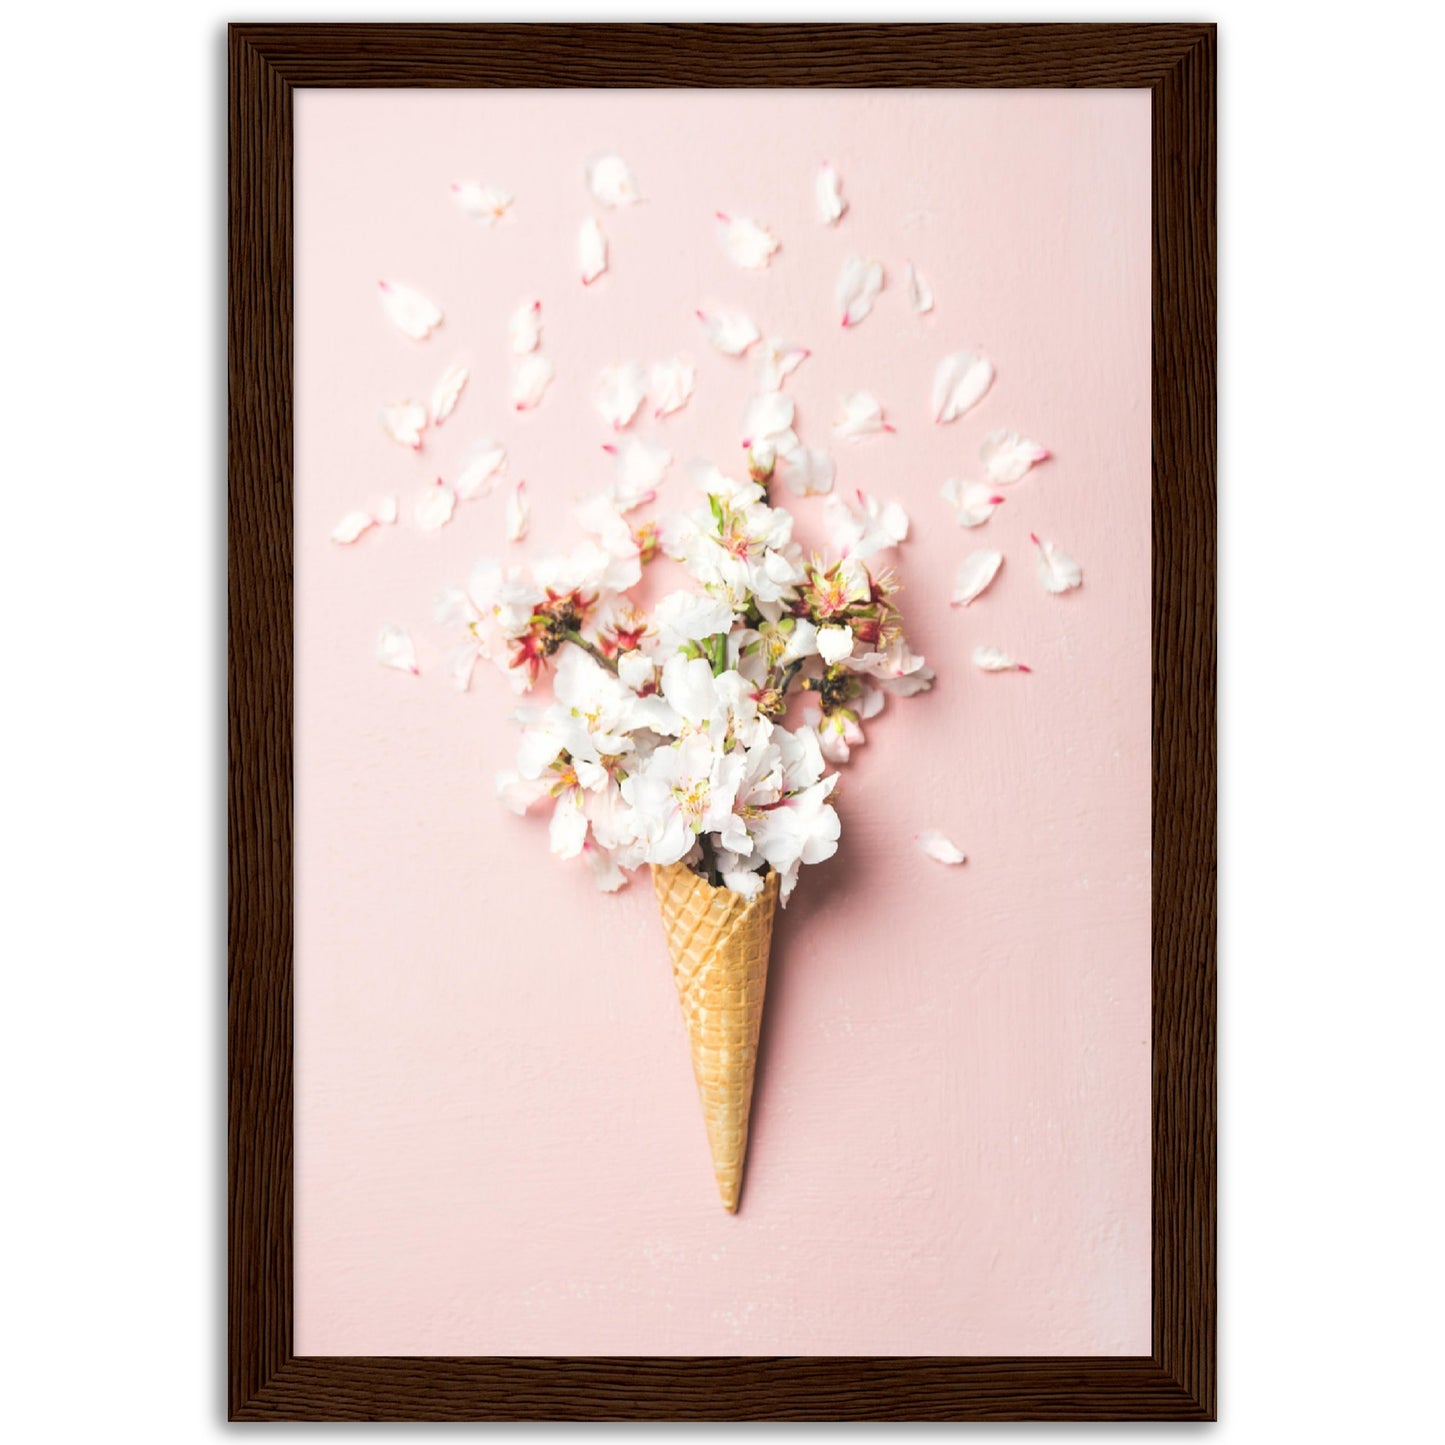 Flower Ice Cream Print